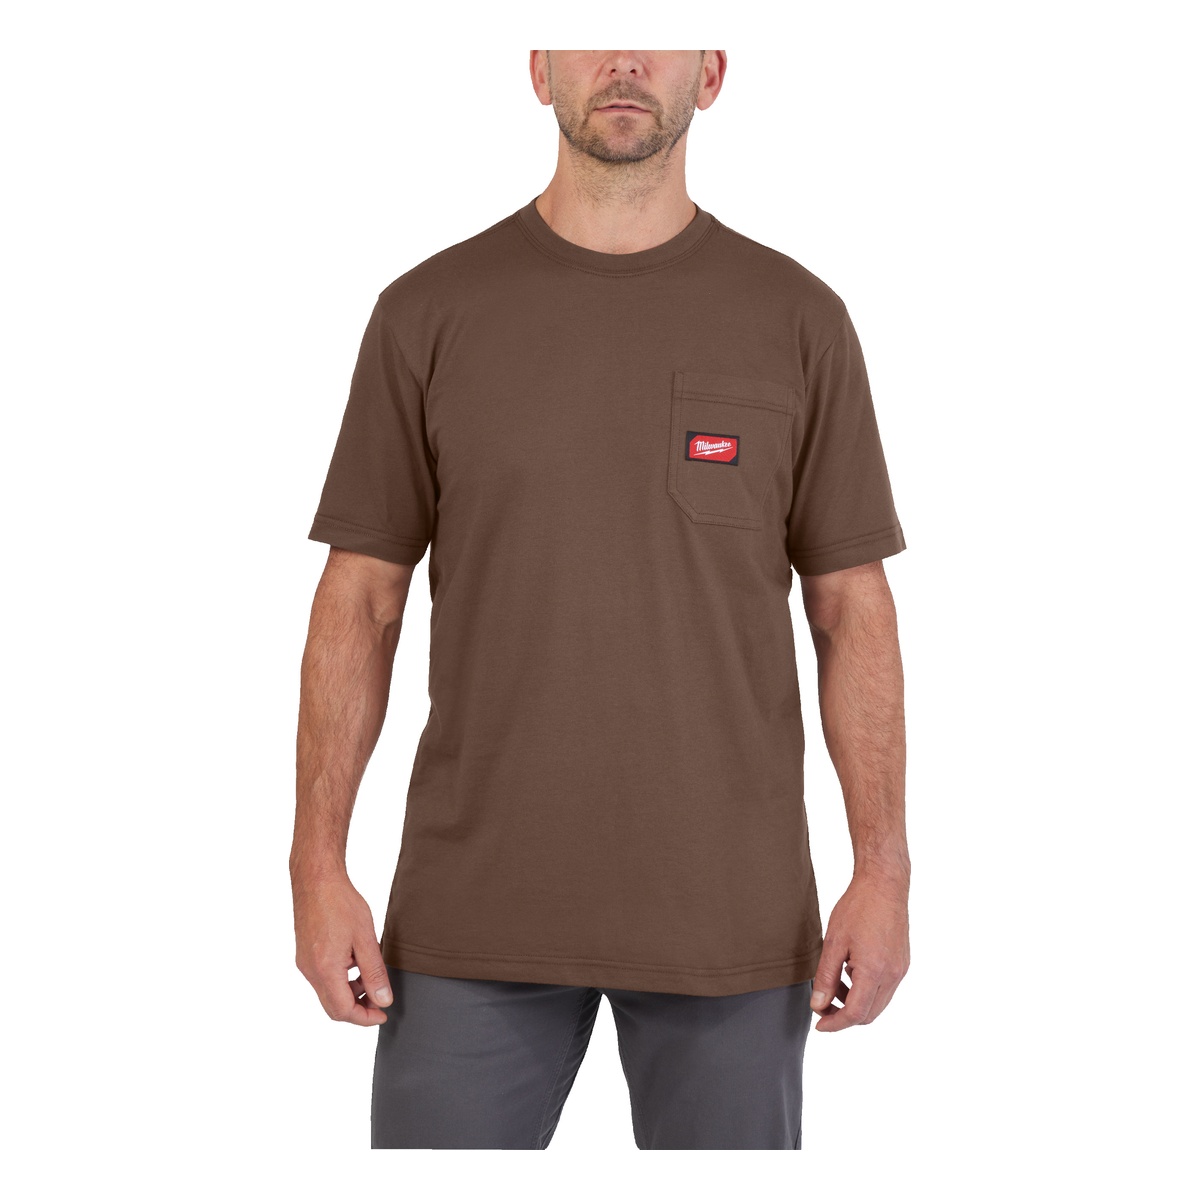 Milwaukee Arbeits-T-Shirt braun mit UV-Schutz WTSSBR-L - 1 Stk.